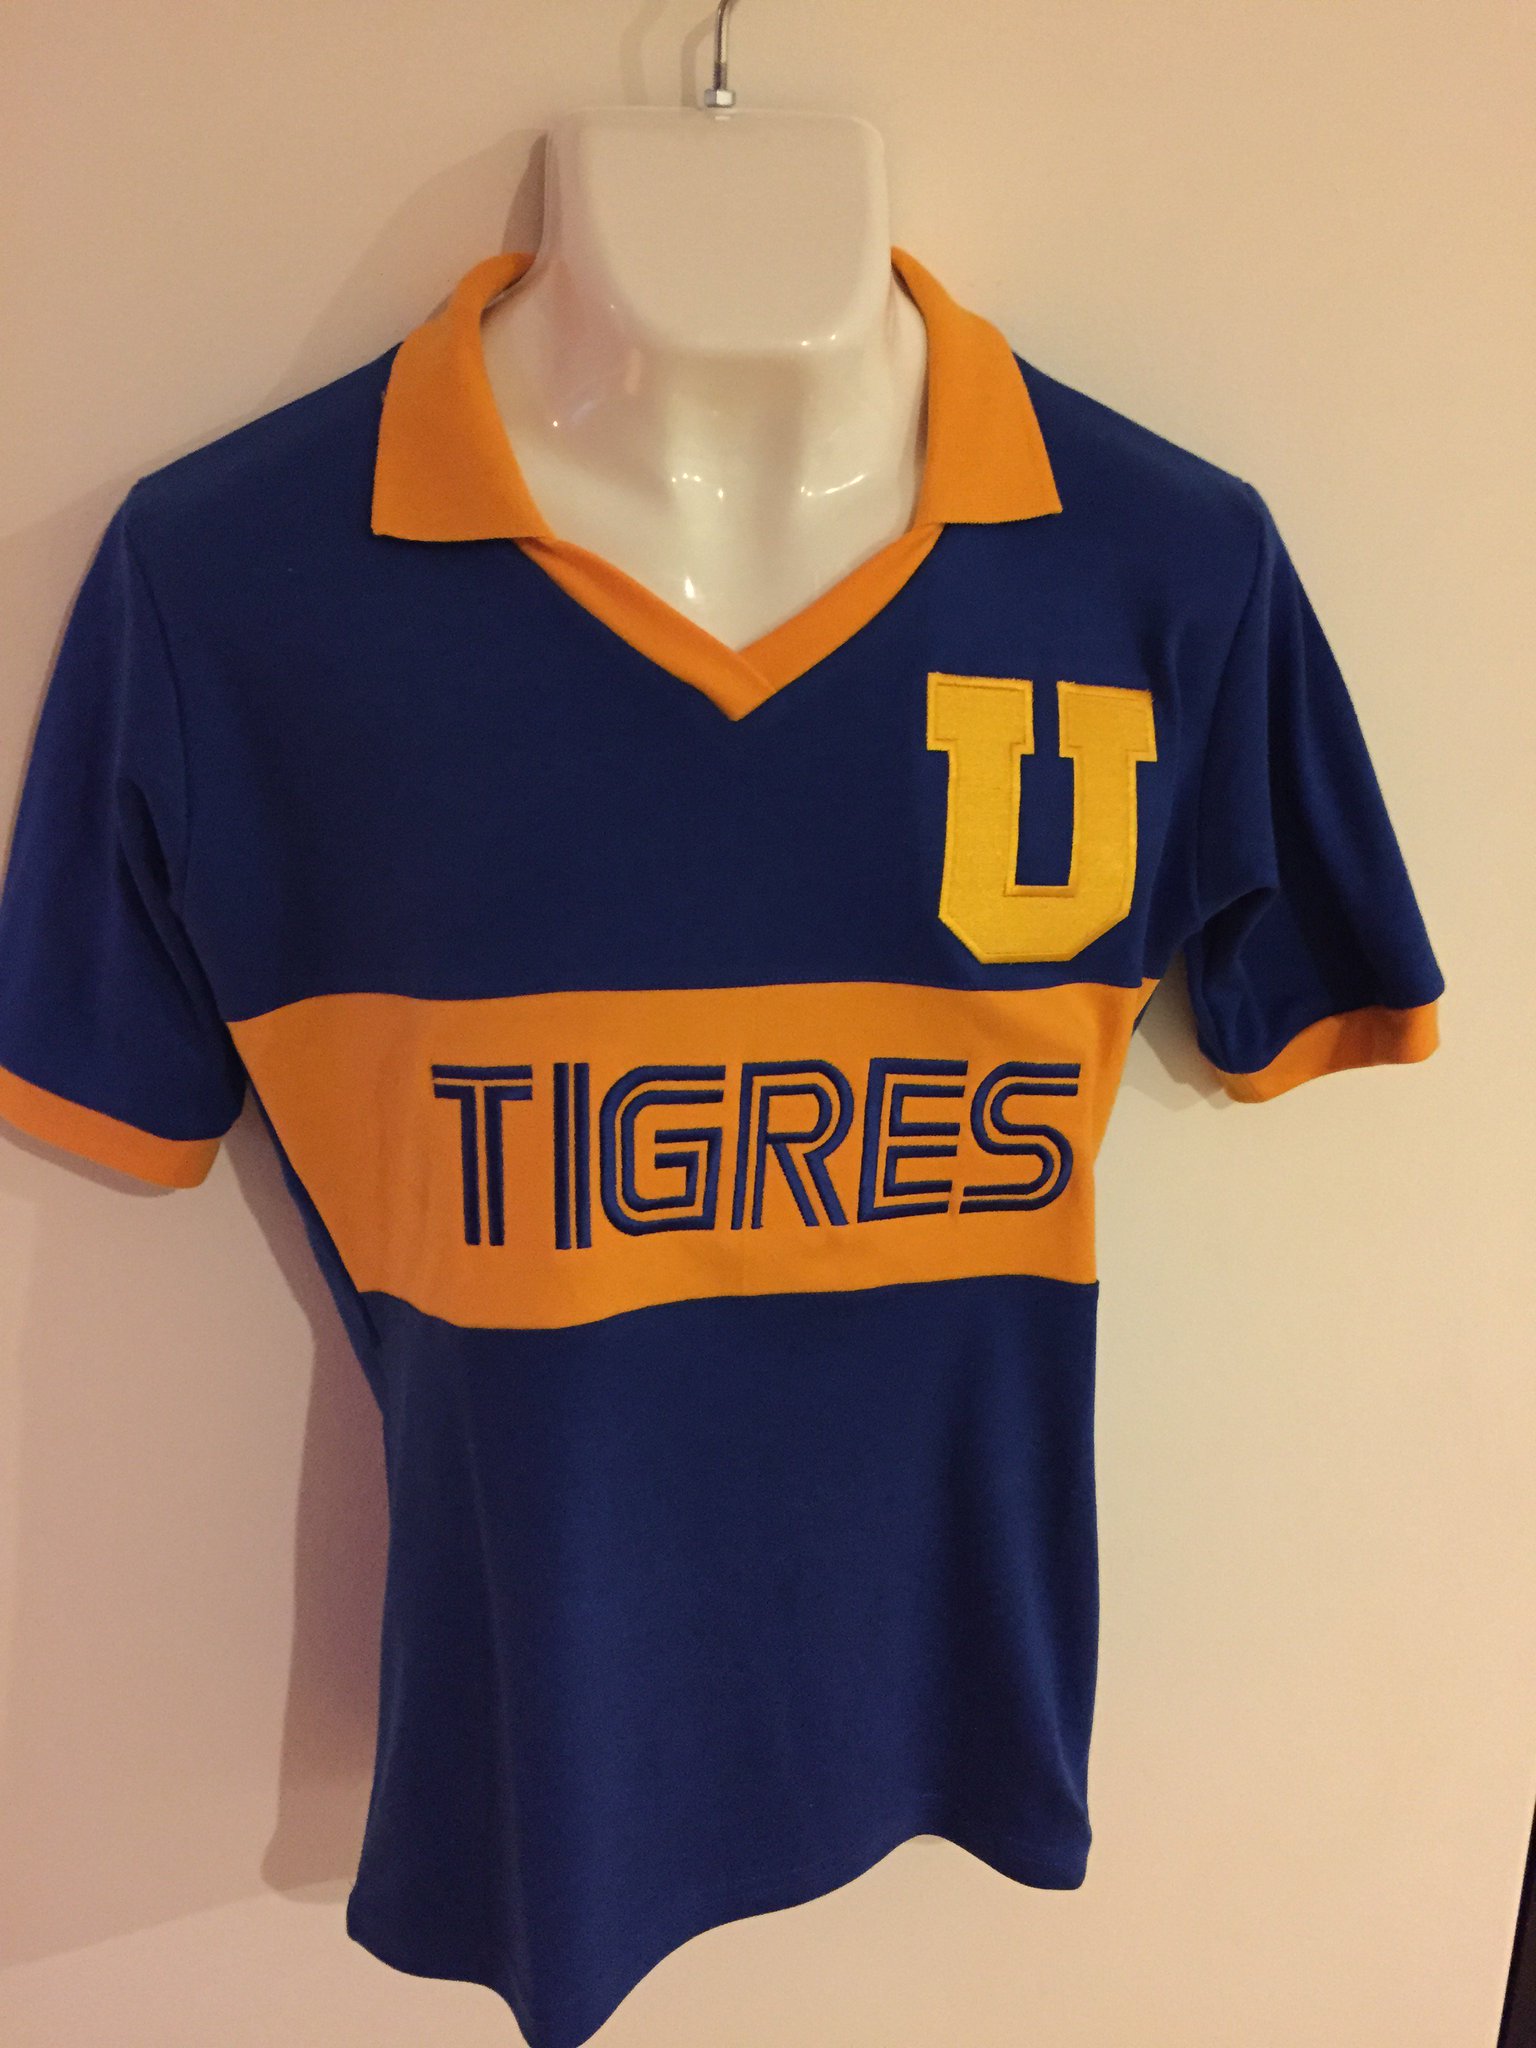 tigres jersey retro